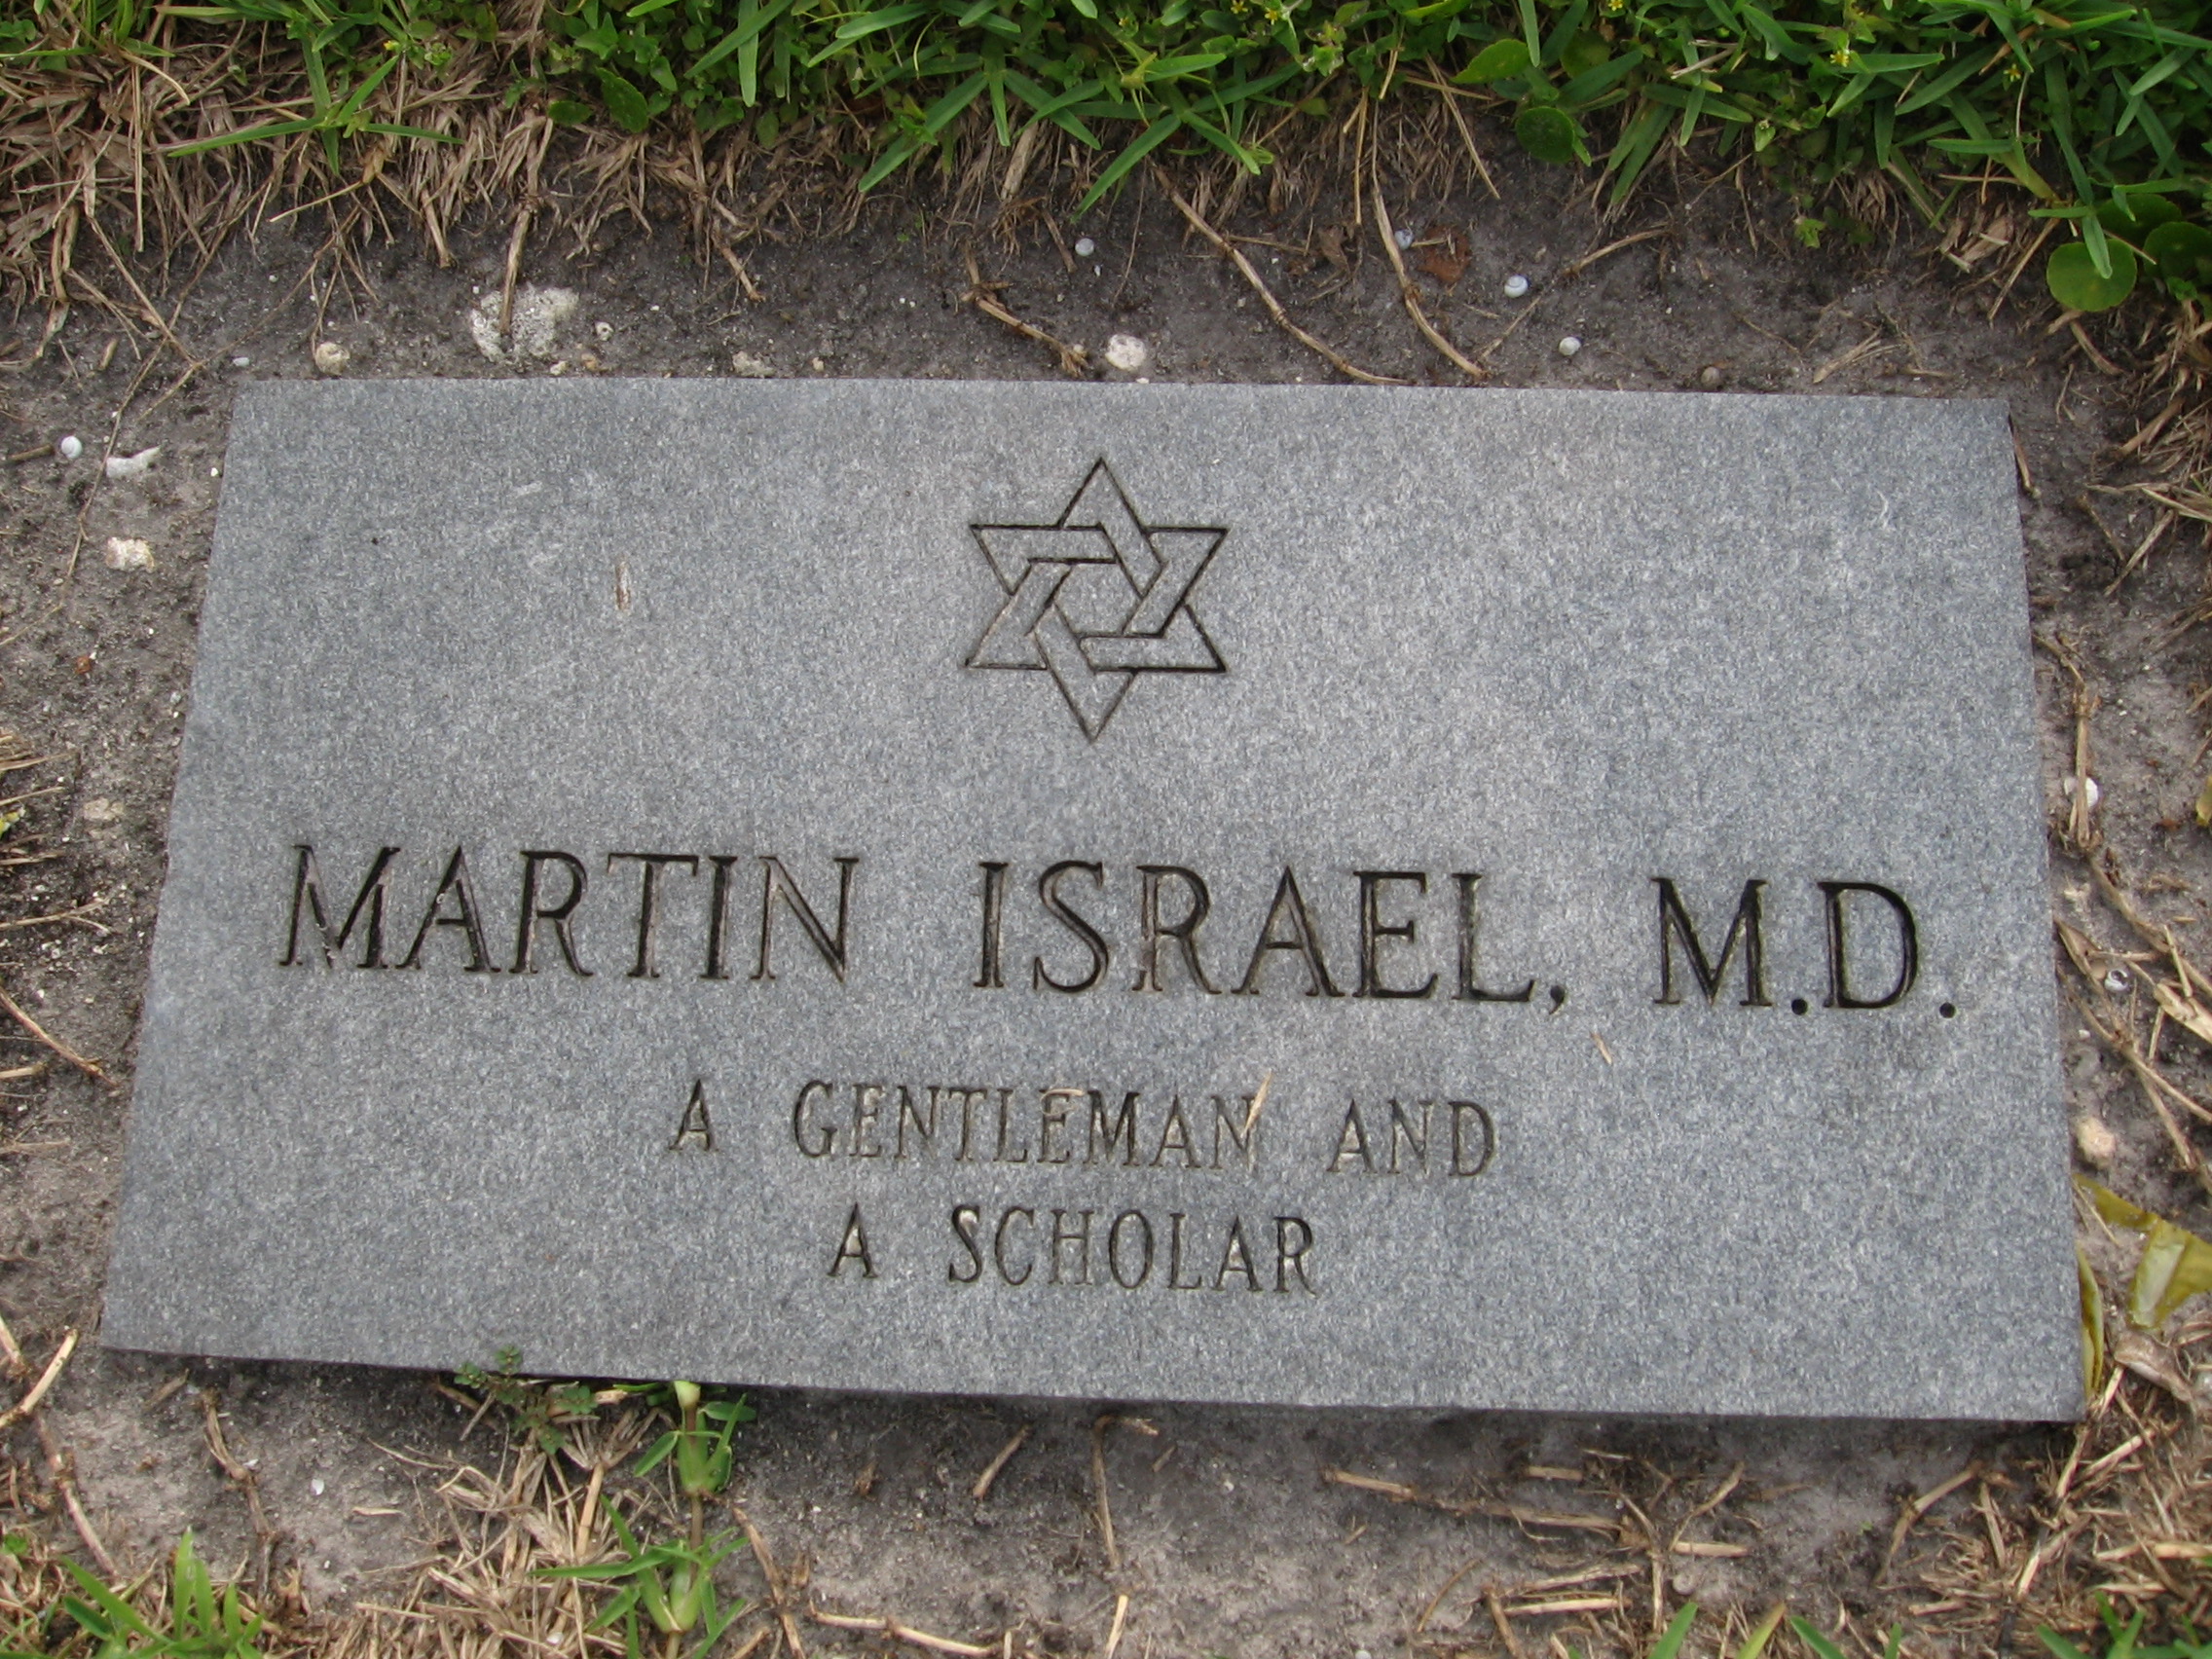 Martin Israel